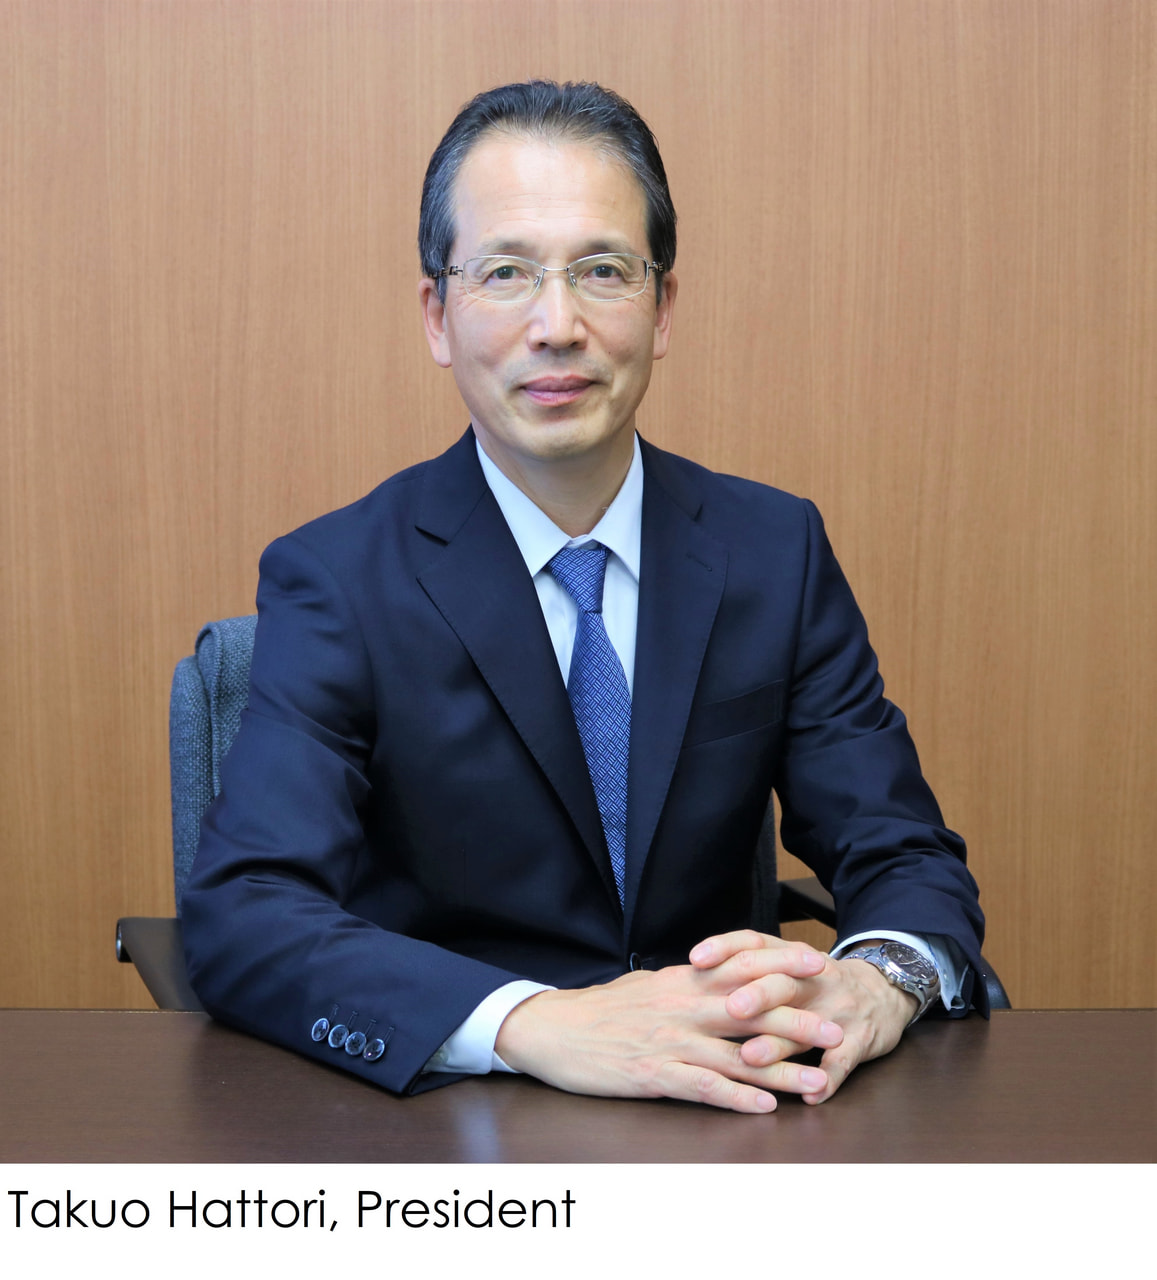 Takuo Hattori, President